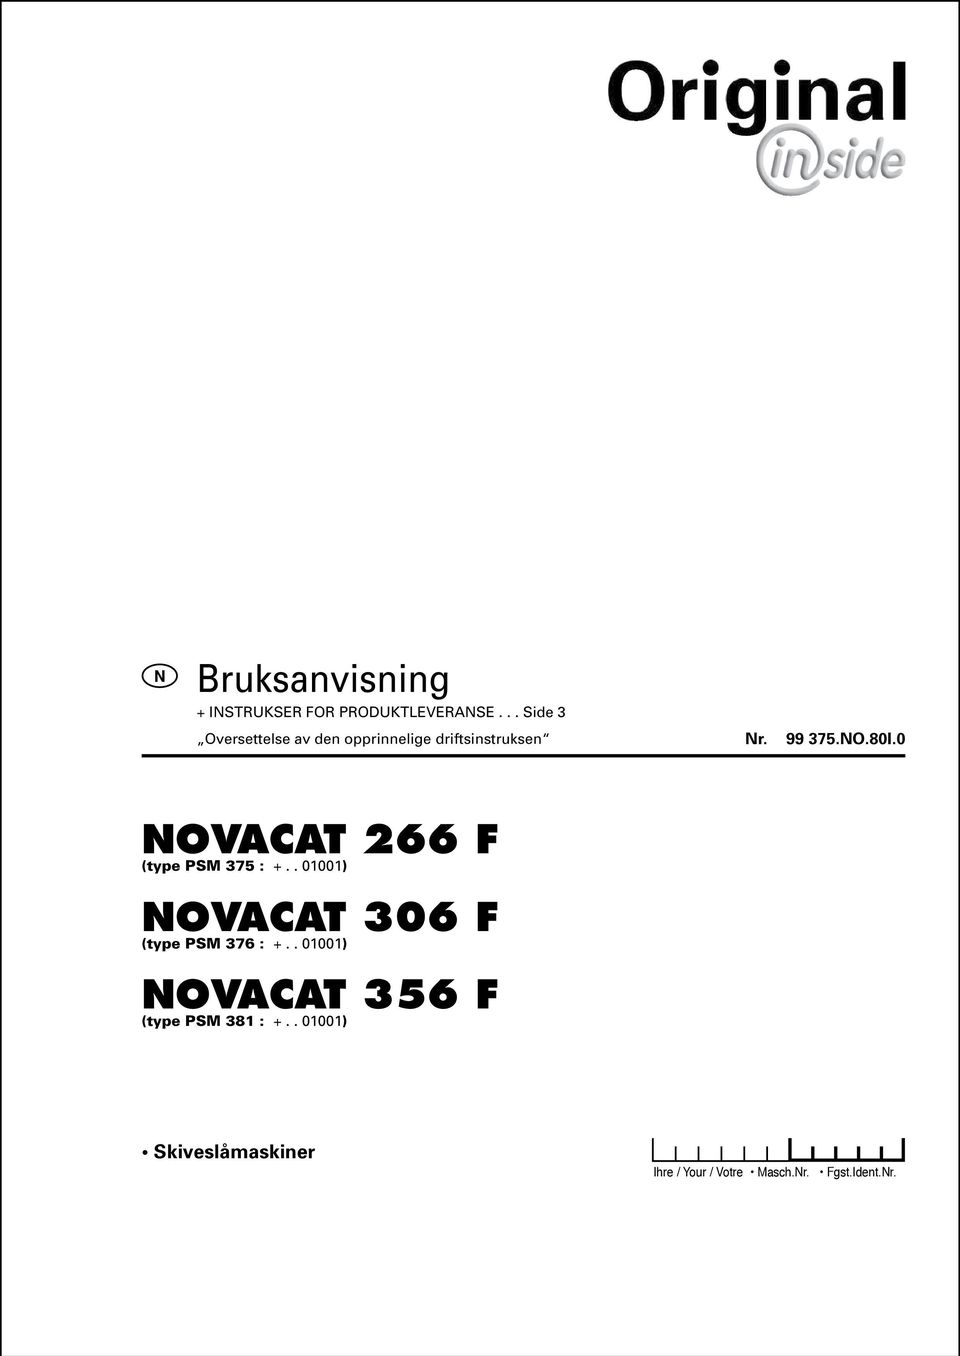 . 01001) OVACAT 356 F (type PSM 381 : +.